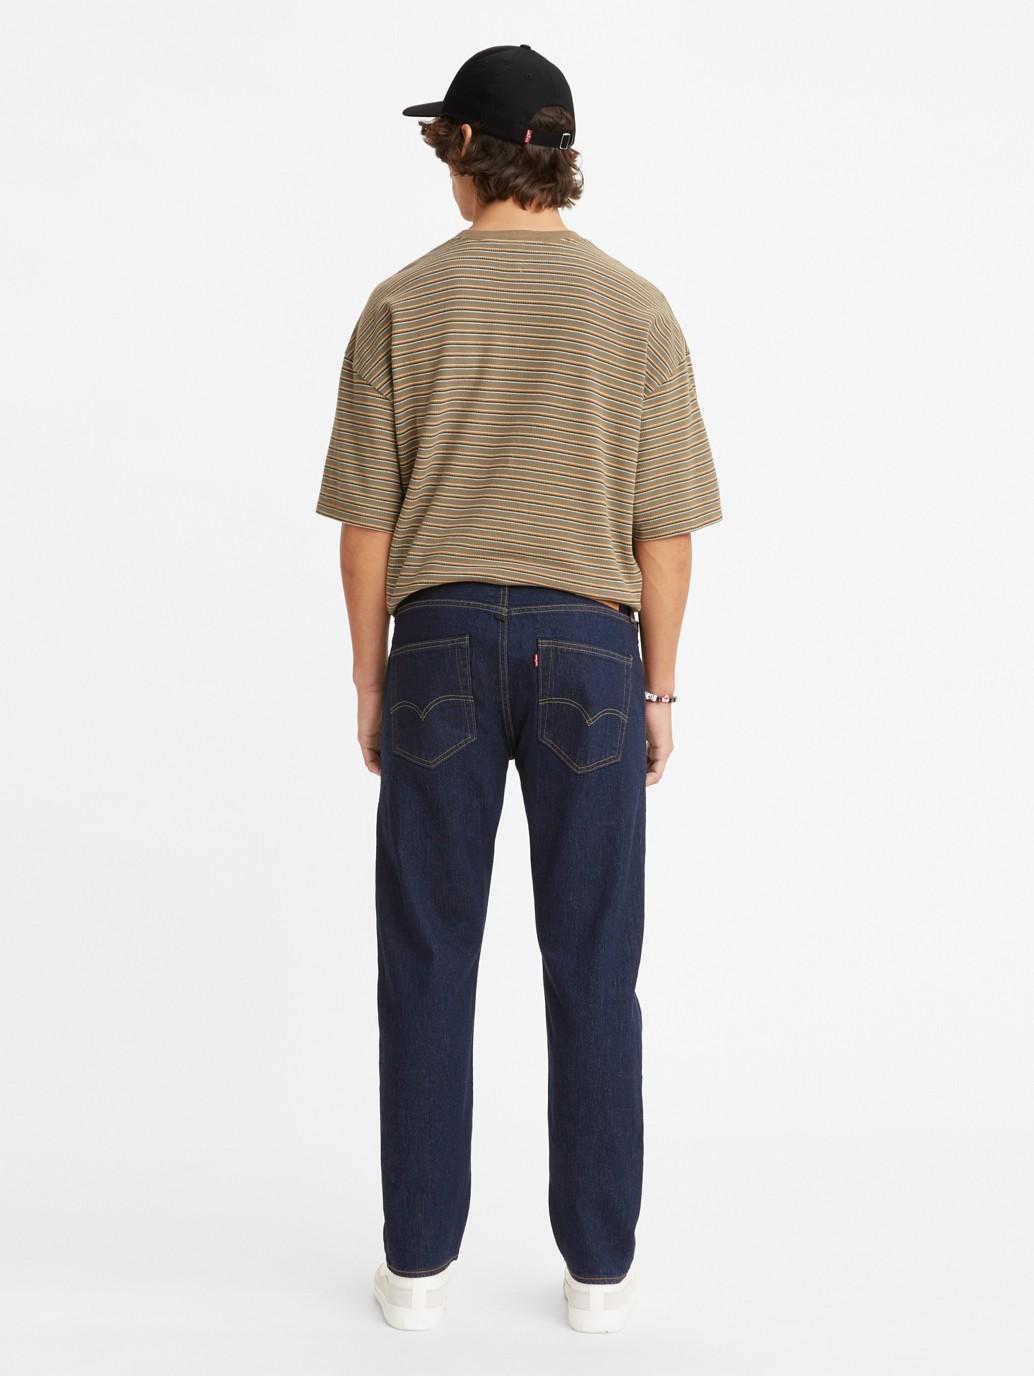 Buy Levi's® Men's 501® Slim Taper Jeans| Levi’s Official Online Store PH